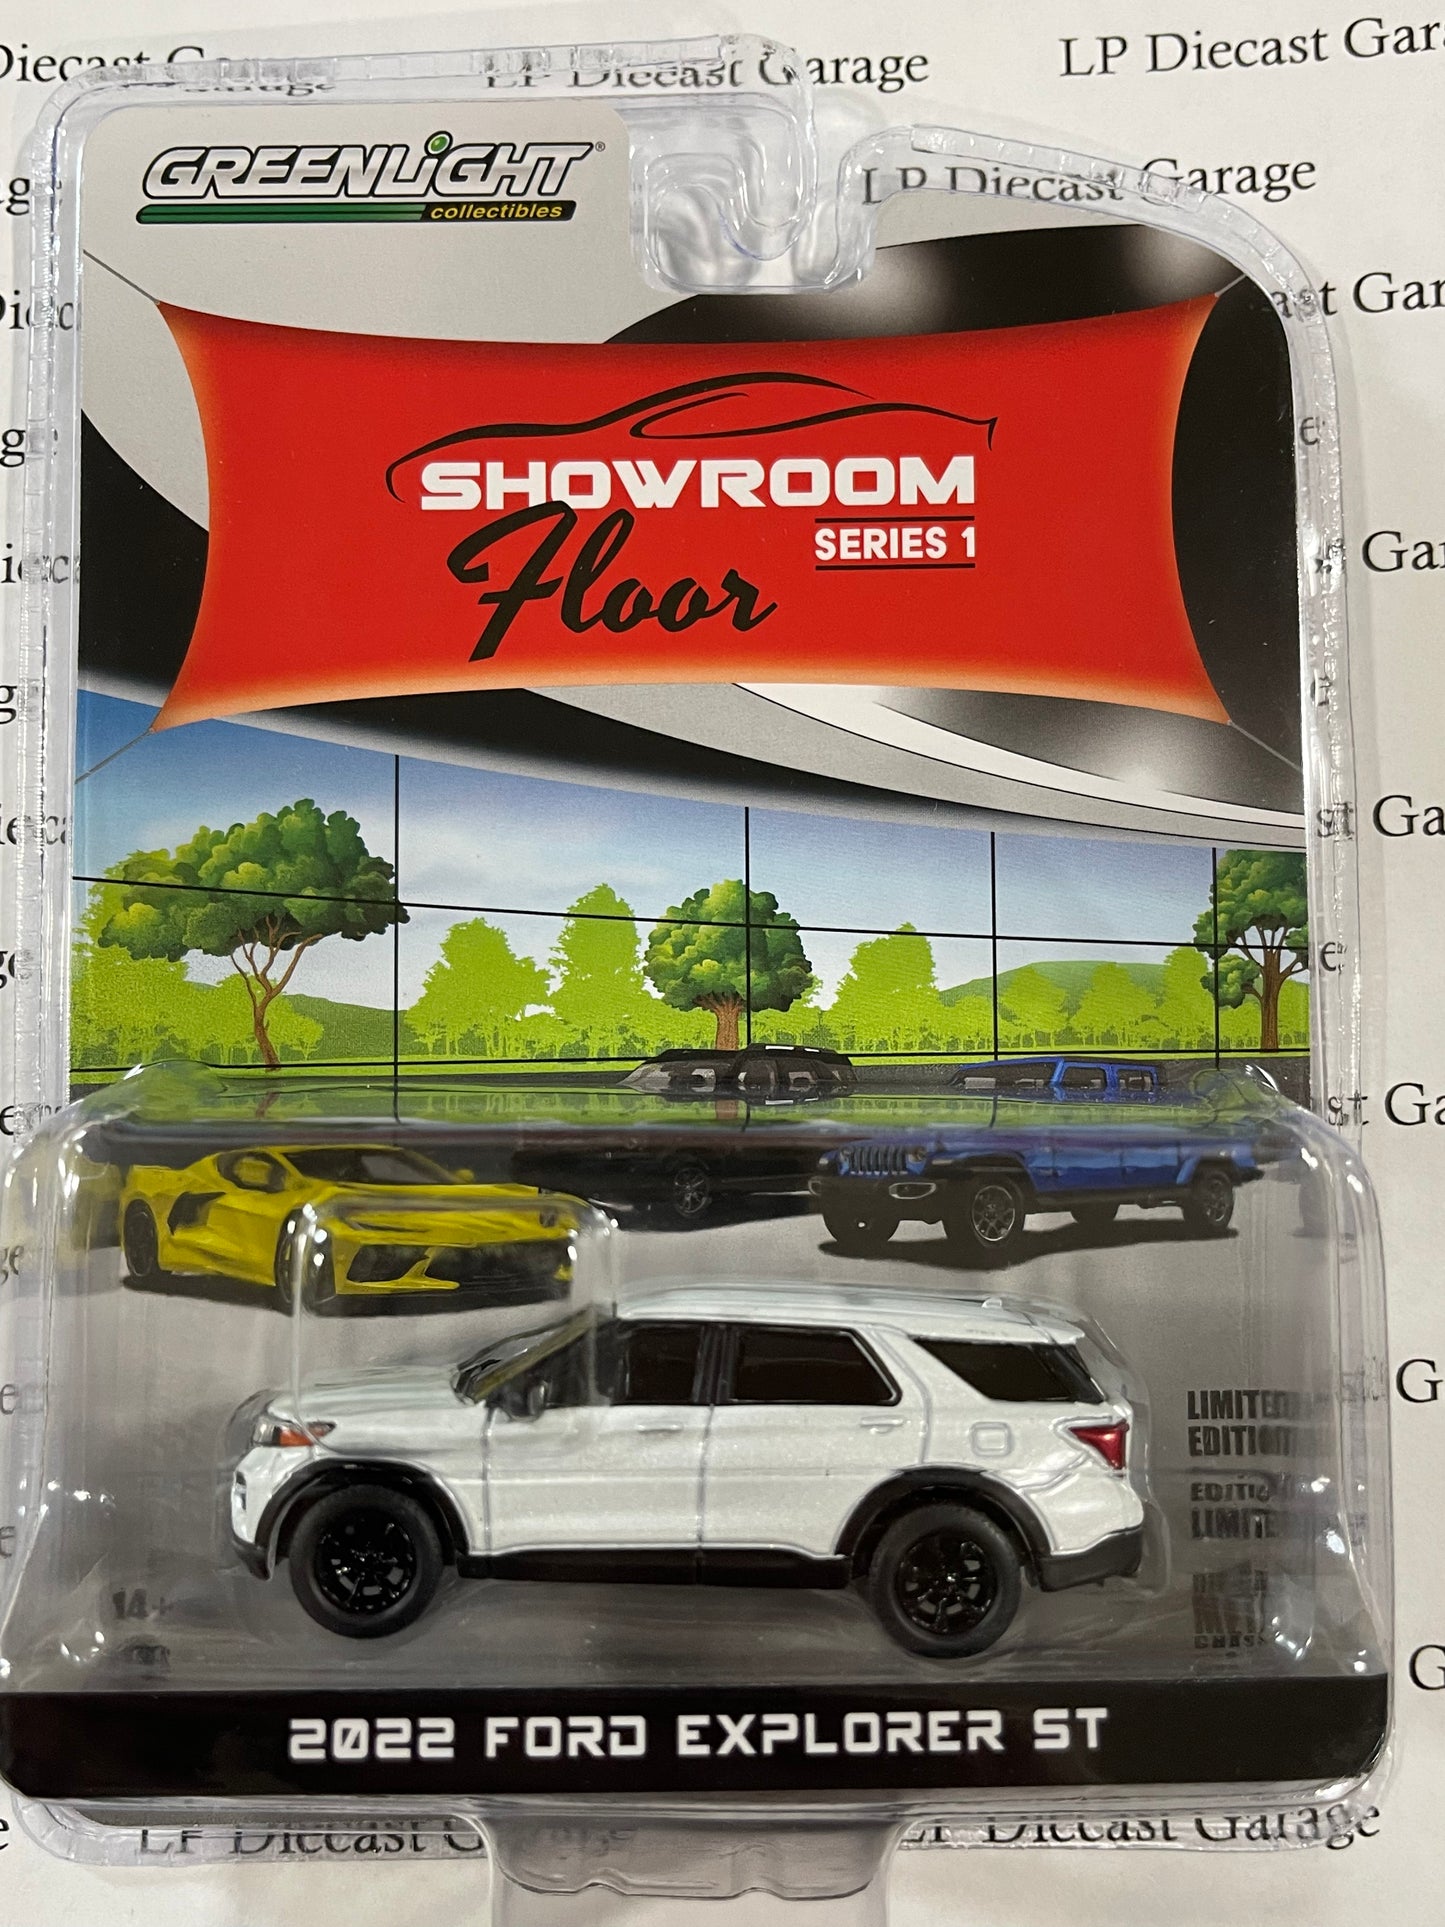 GREENLIGHT 2022 Ford Explorer ST White "Showroom Series" 1:64 Diecast